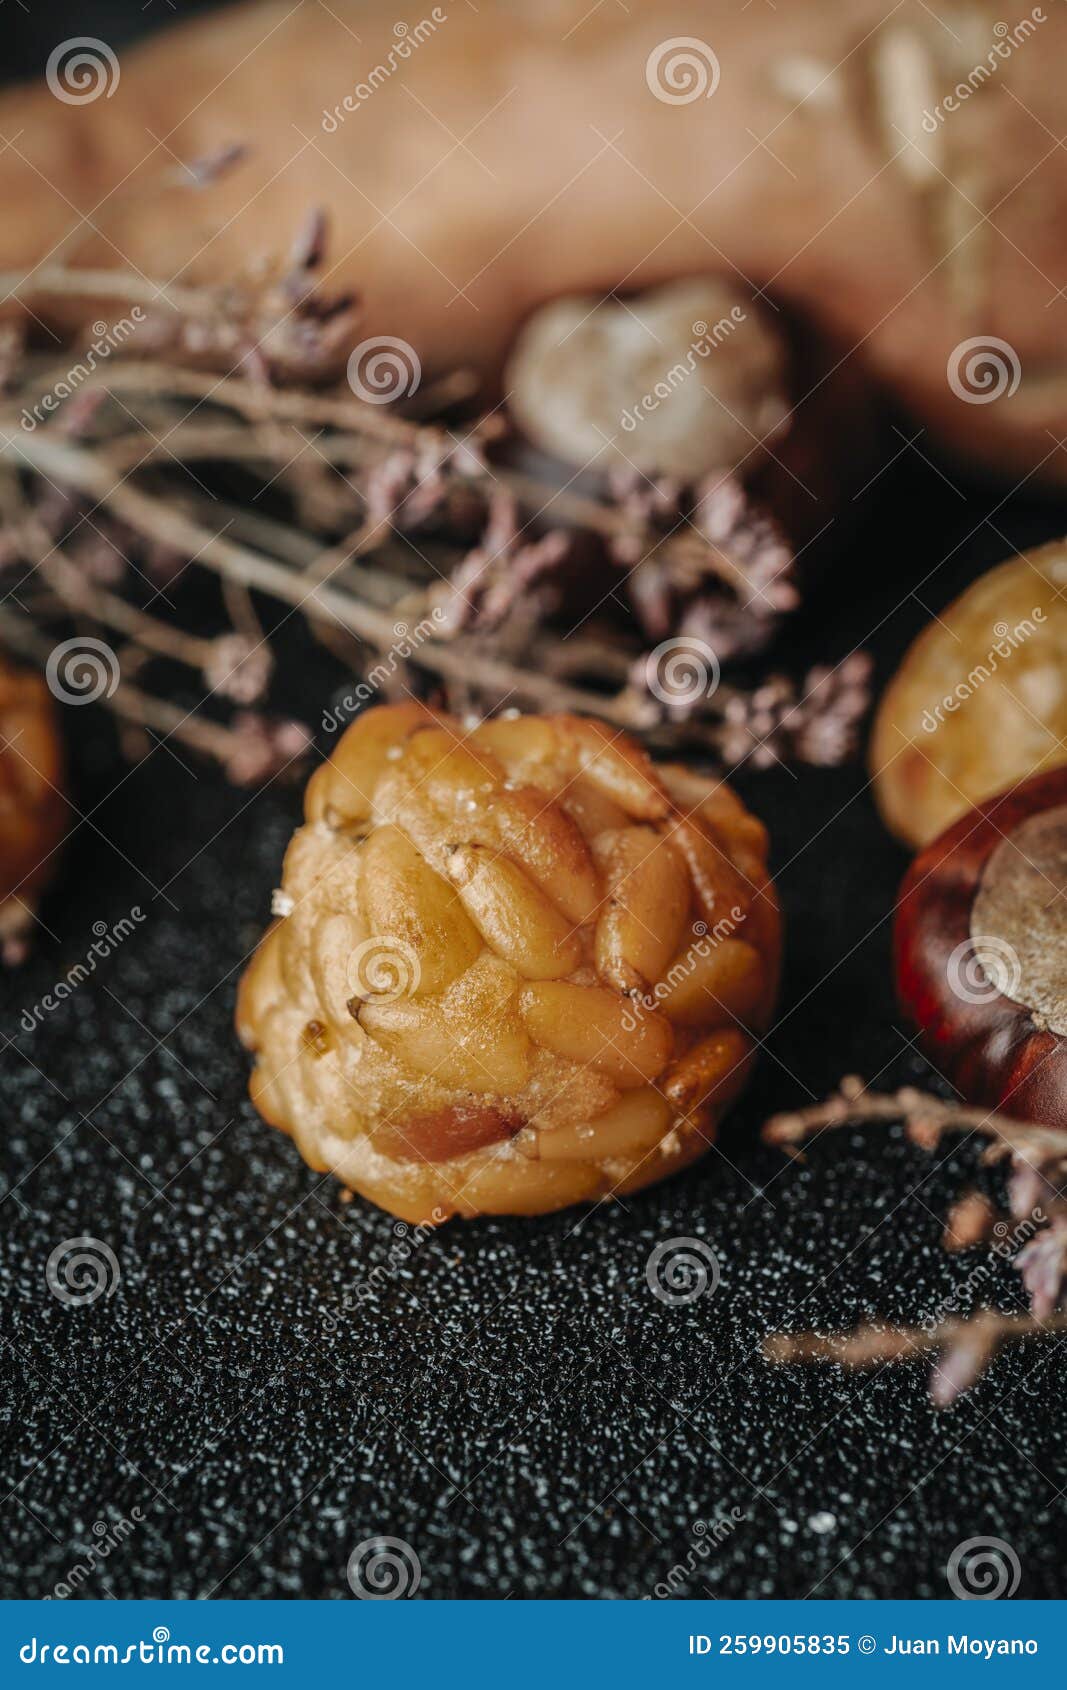 panellet de pinyons, chestnuts and sweet potato